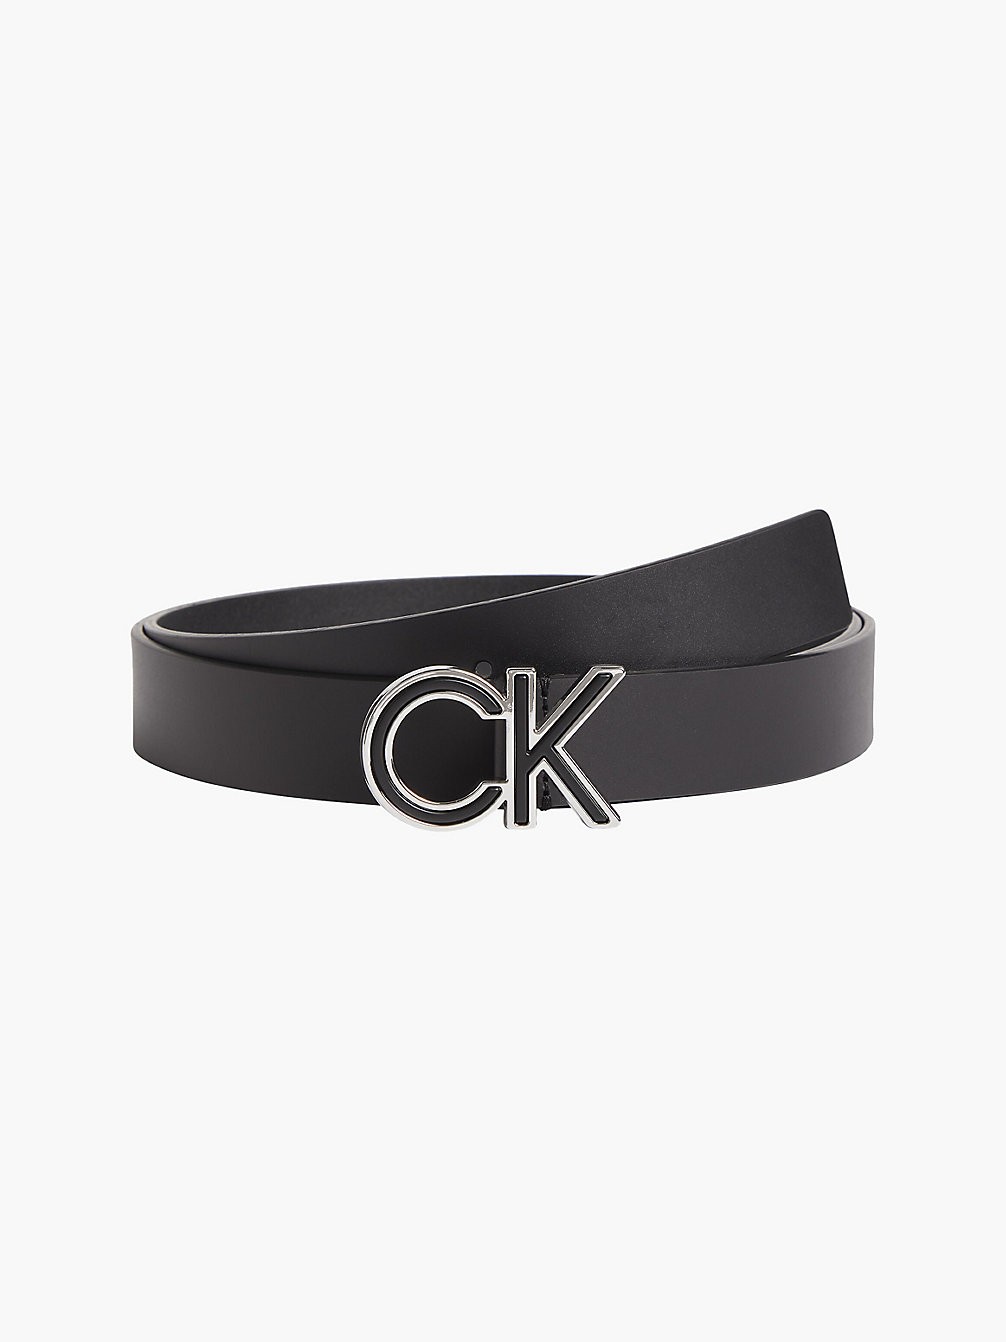 CK BLACK > Unisex-Logo-Ledergürtel > undefined unisex - Calvin Klein